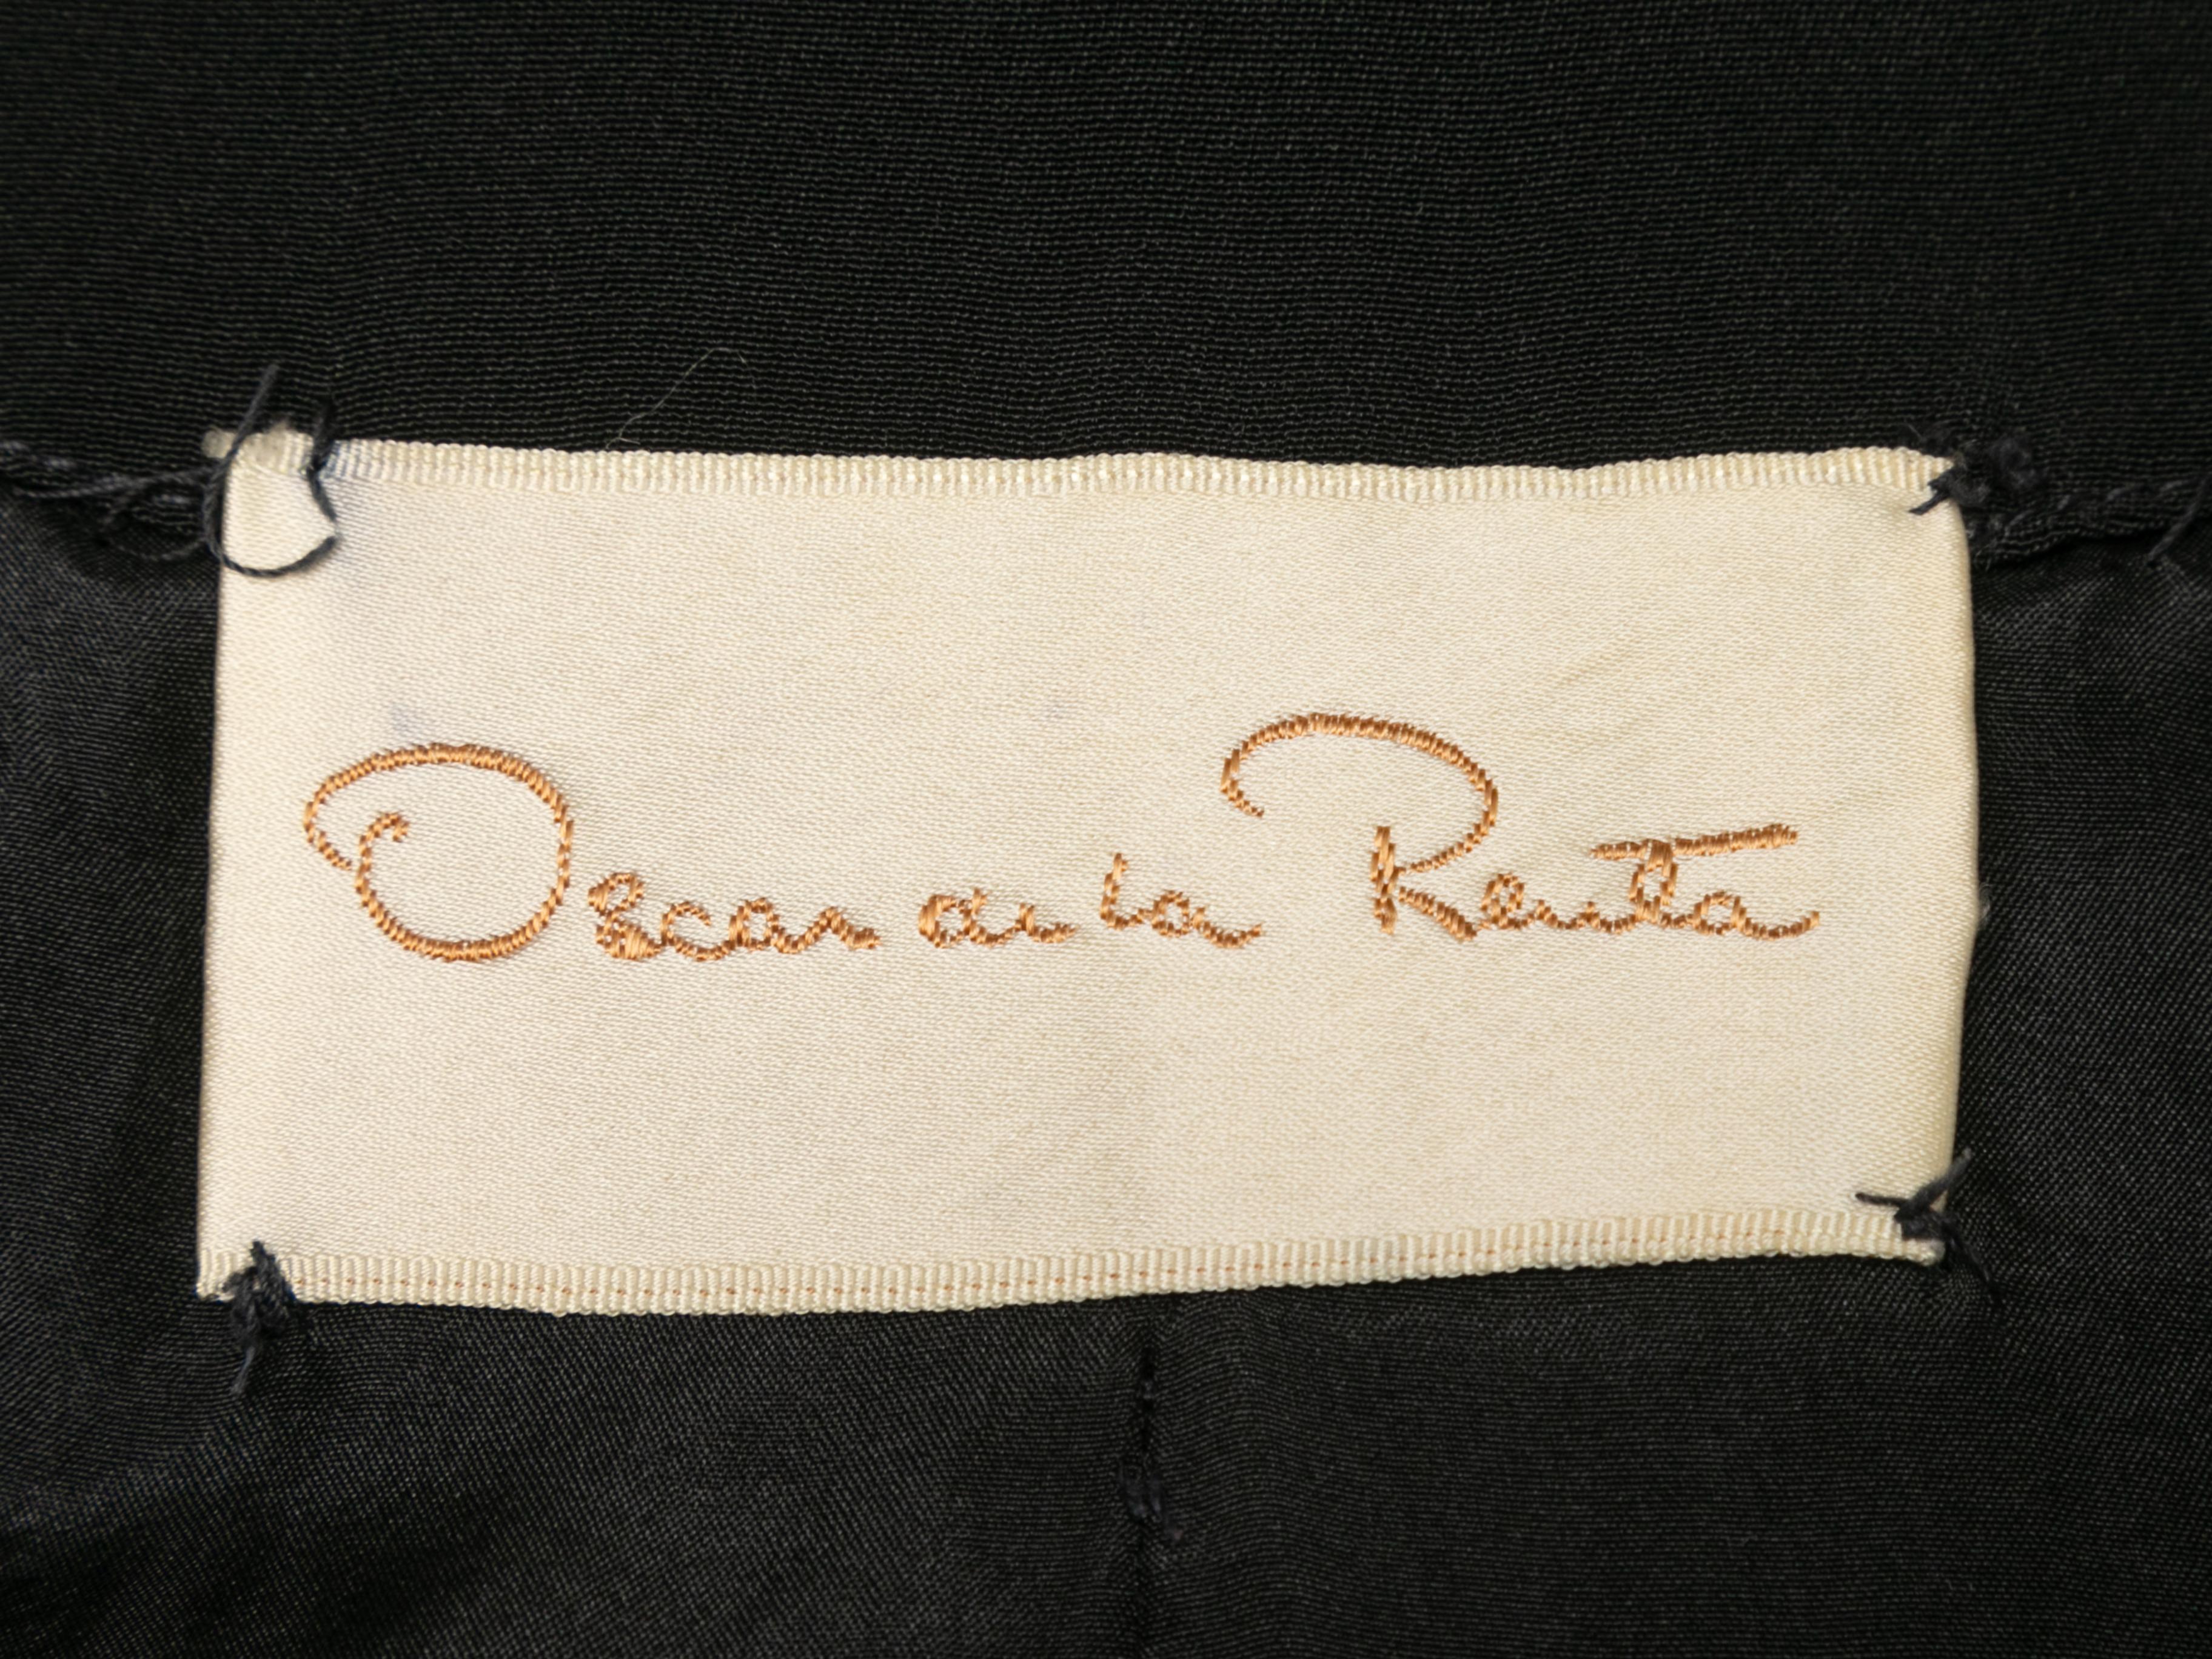 Black short sleeve dress by Oscar de la Renta. Ruffle trim. V-neck. Zip closure at center front. 32